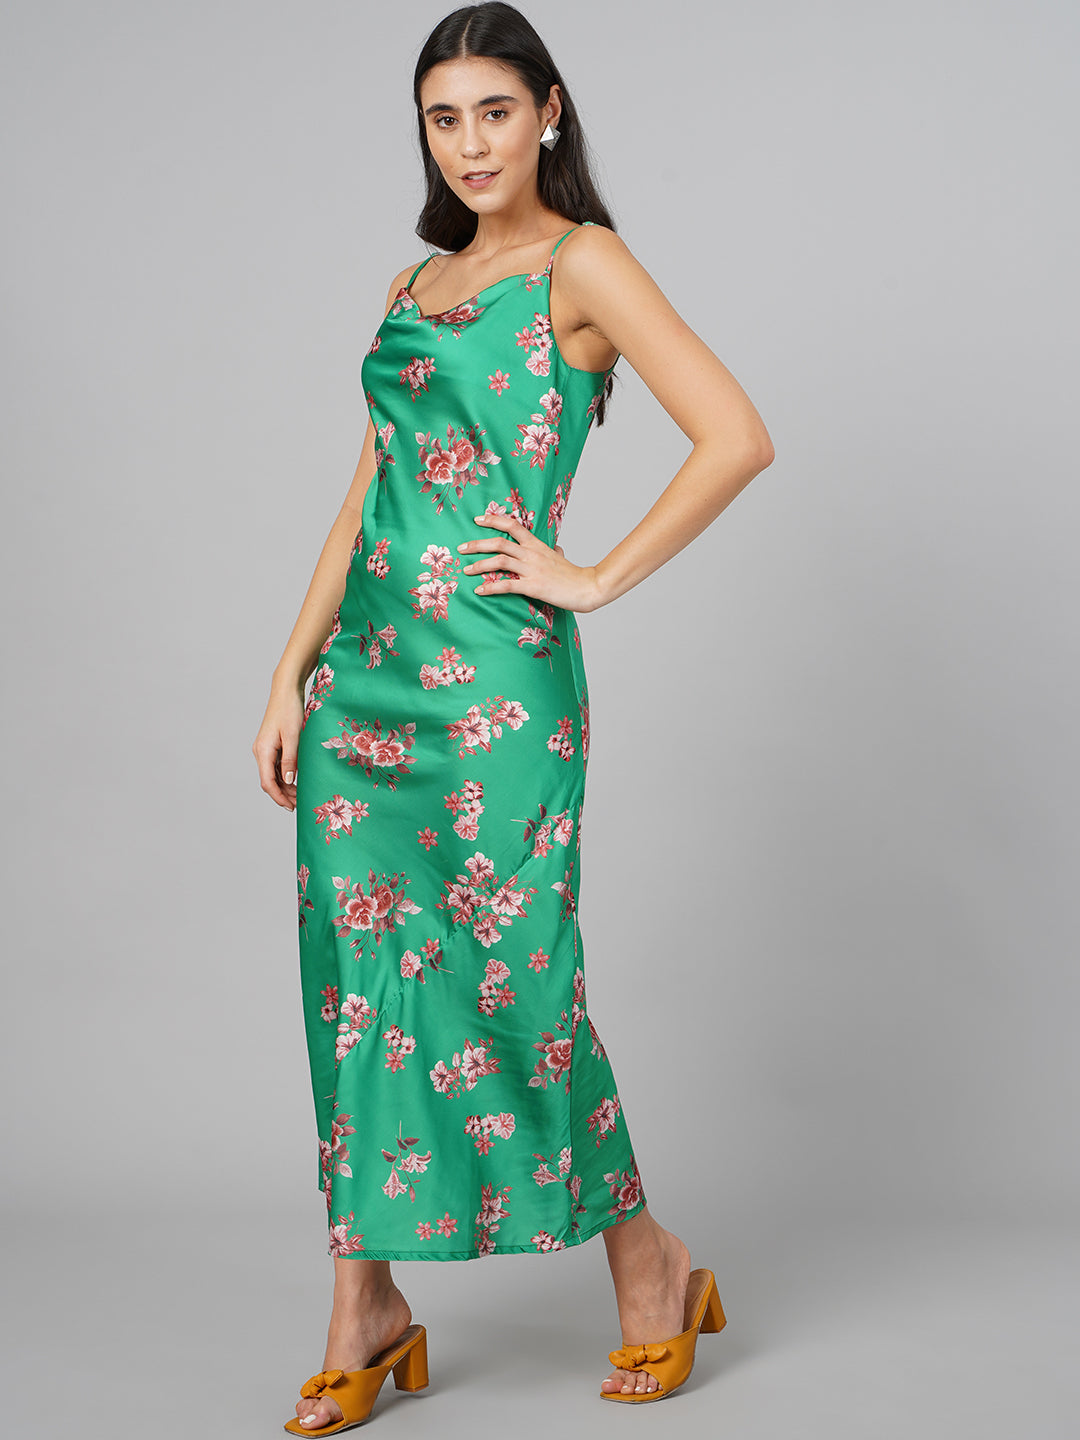 SCORPIUS Satin Green Printed Dress